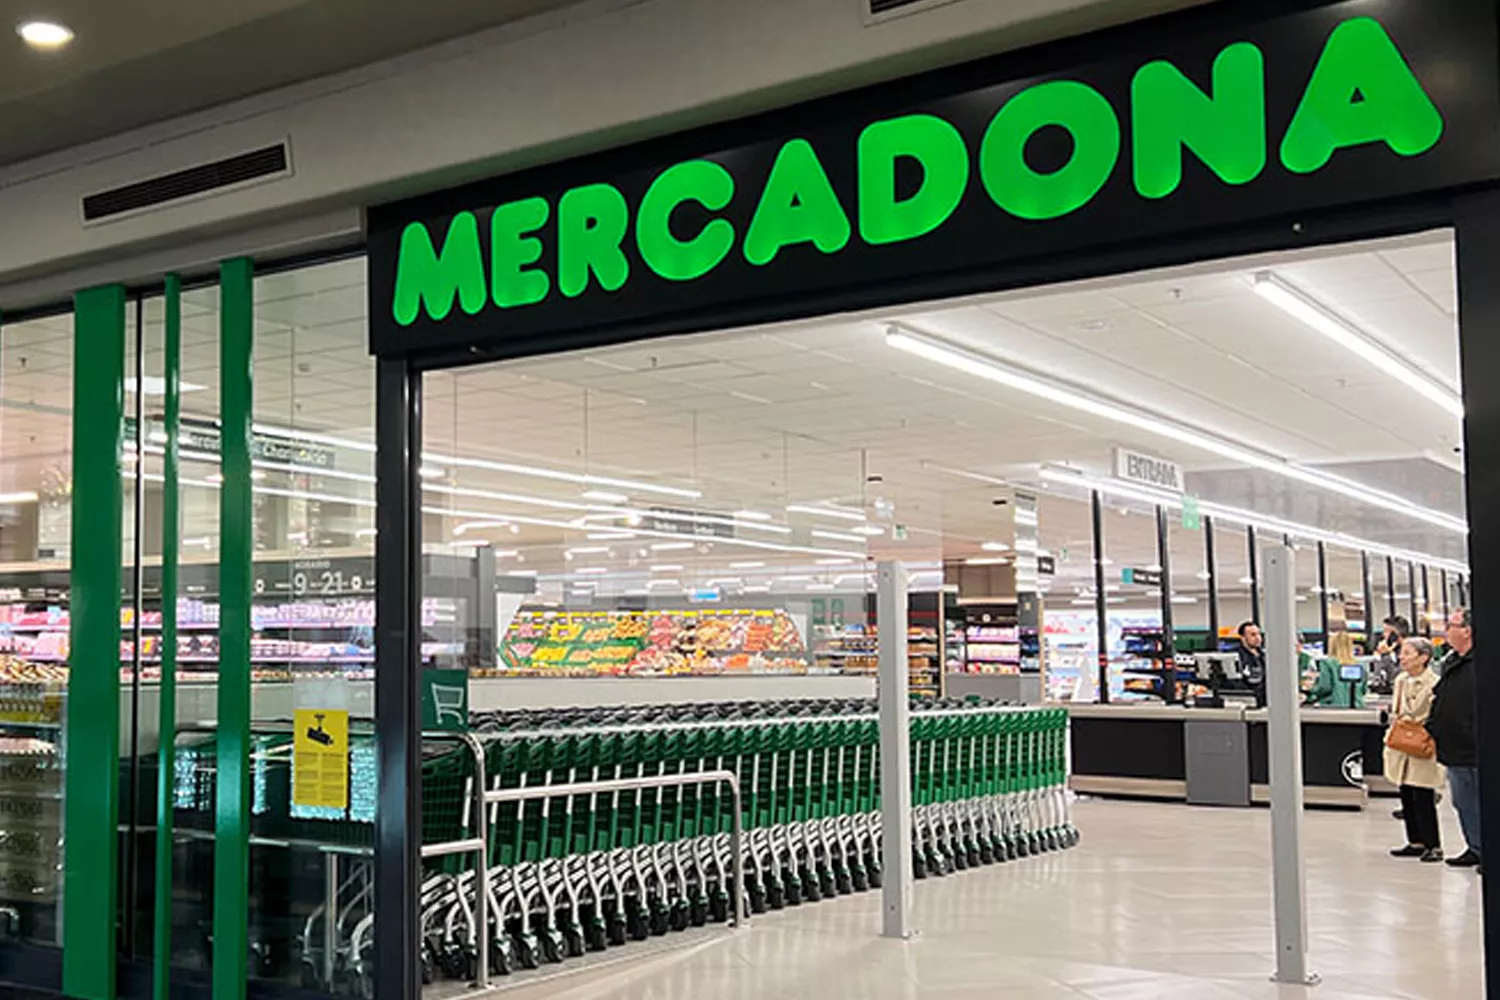 La entrada a un supermercado Mercadona / MERCADONA